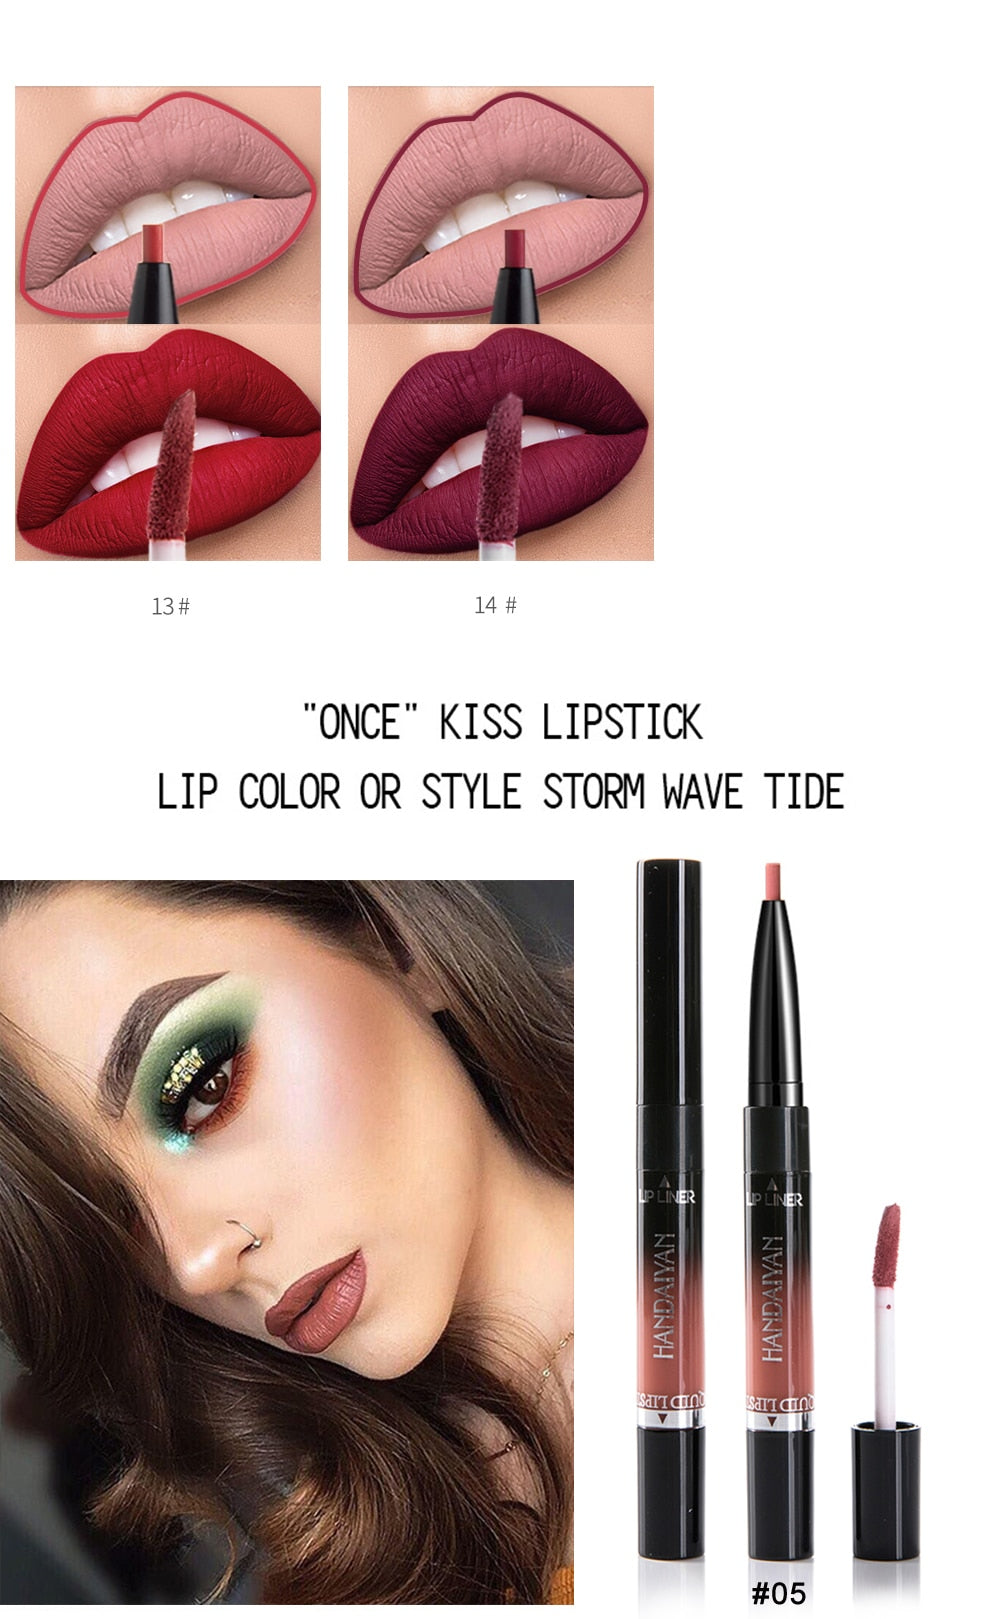 2 In 1 Lip Liner Matte Lip Pencil 14Color Waterproof Nude Color Moisturizing Lipstick Long-lasting Lips Llipliner - SixtyKey new model design Dubai fashion style 2021 best price